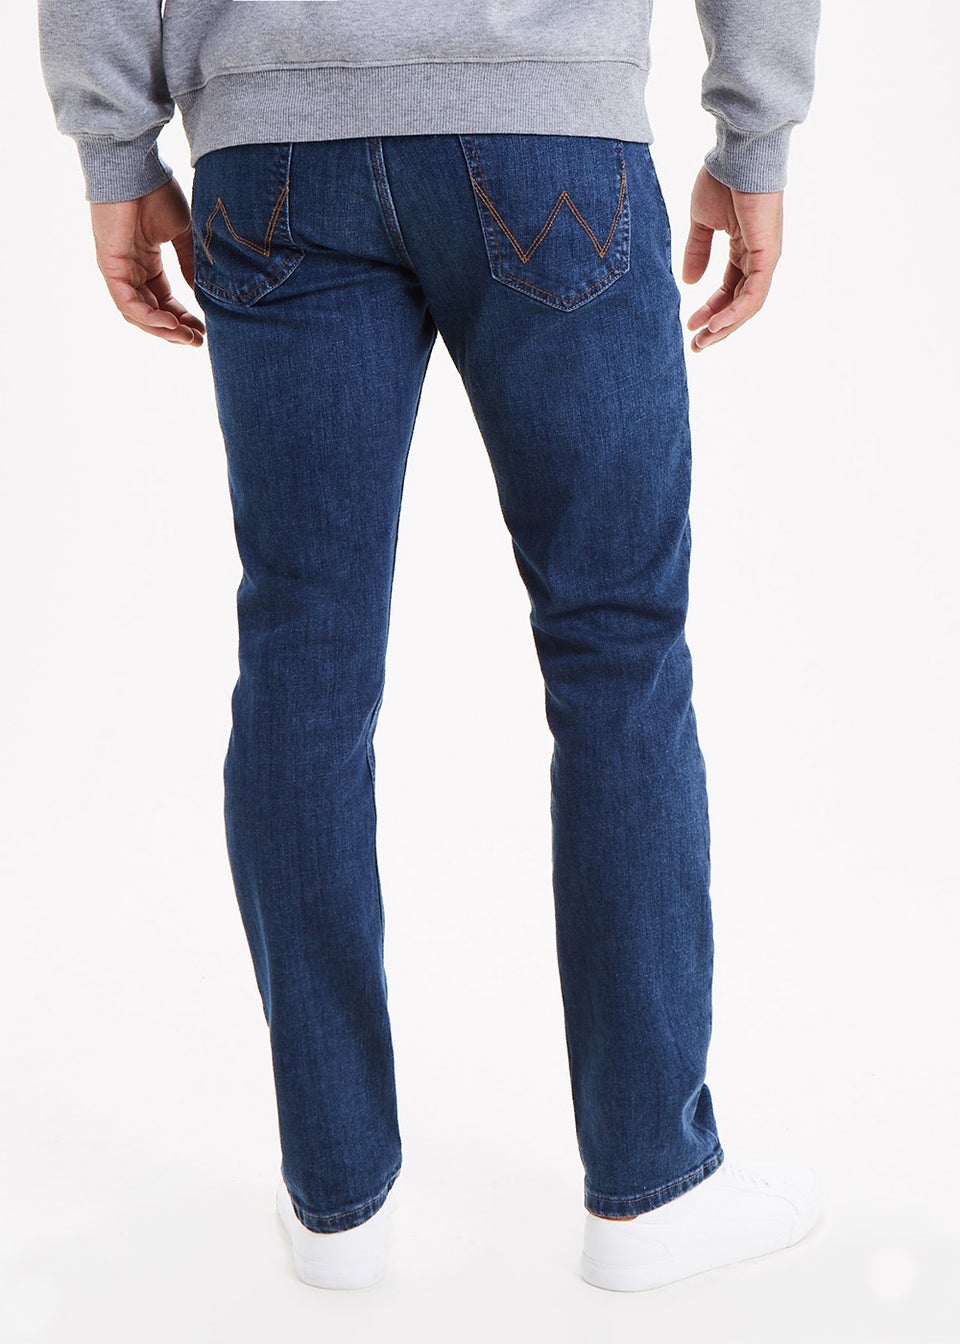 Wrangler Dark Wash Stretch Straight Fit Jeans